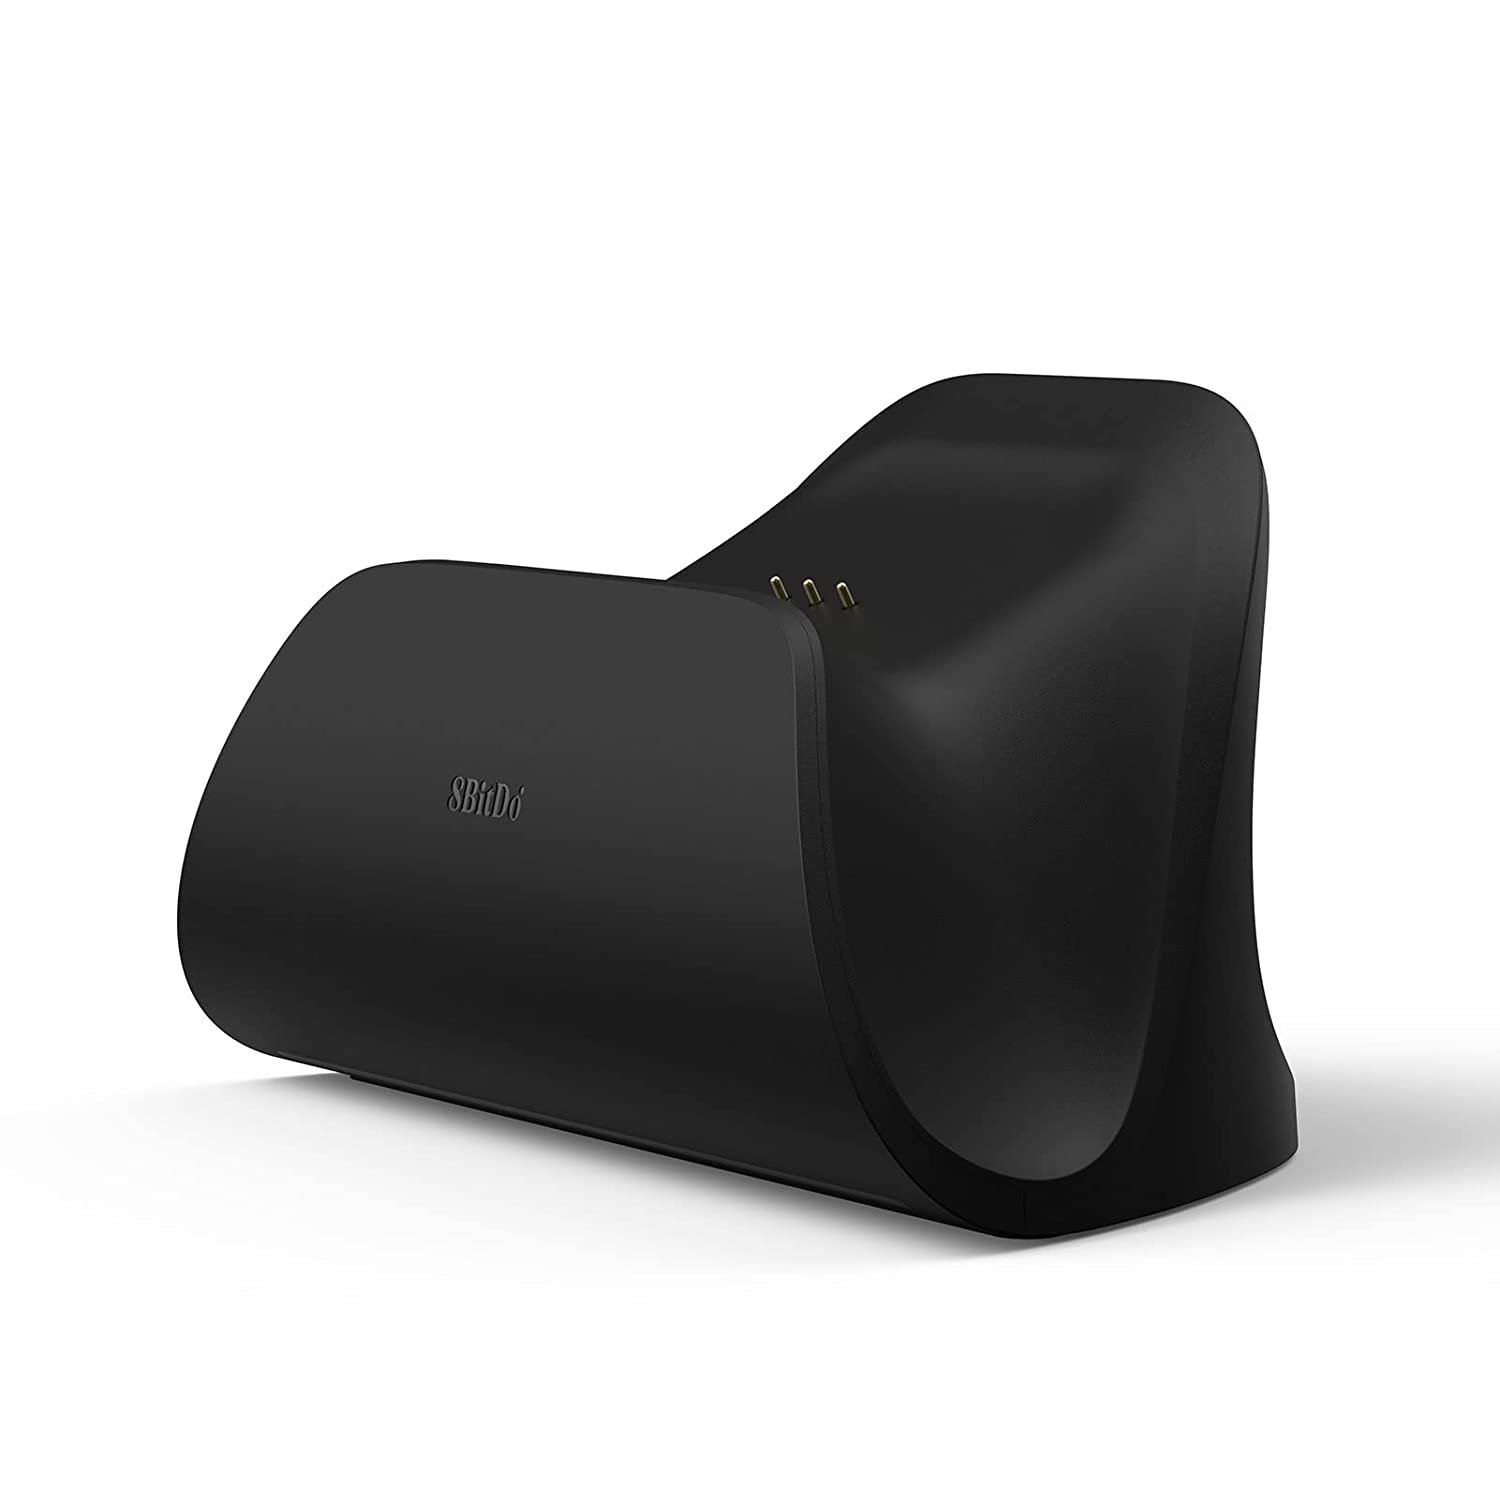 8BitDo Ultimate Bluetooth Controller w/ Charging Dock (Black)